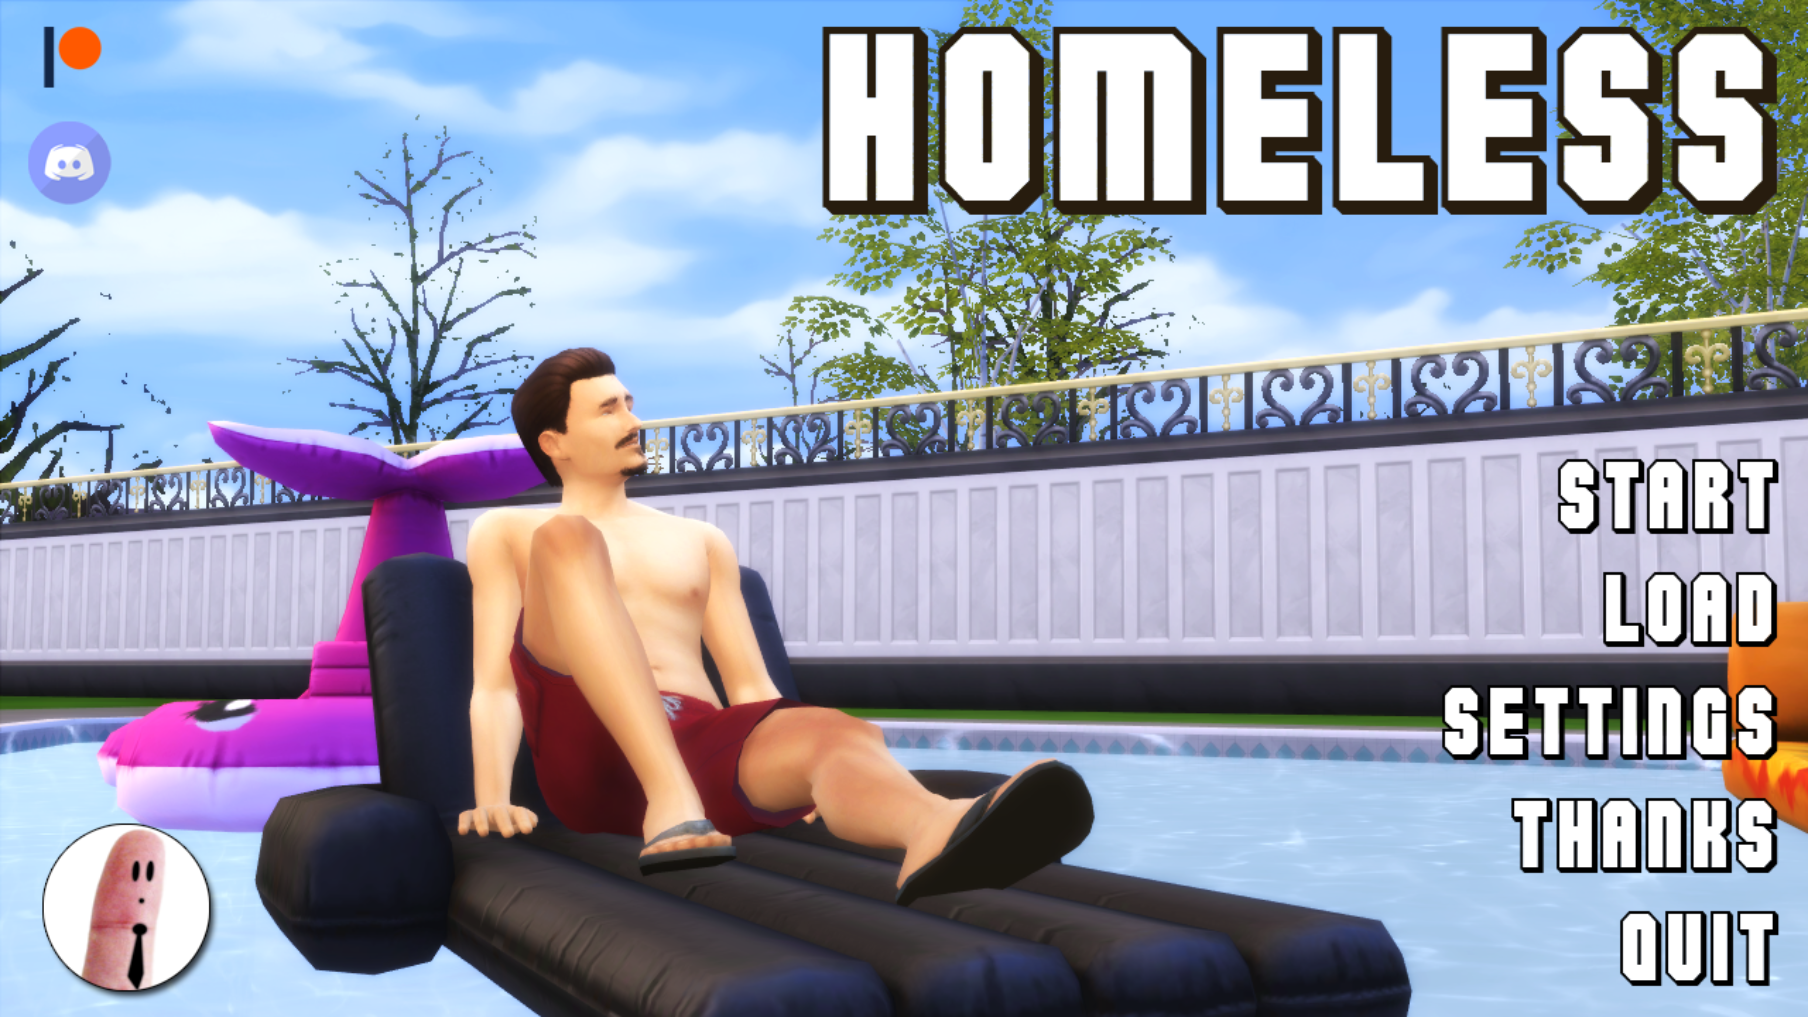 Homeless v0.2 - free game download, reviews, mega pic image